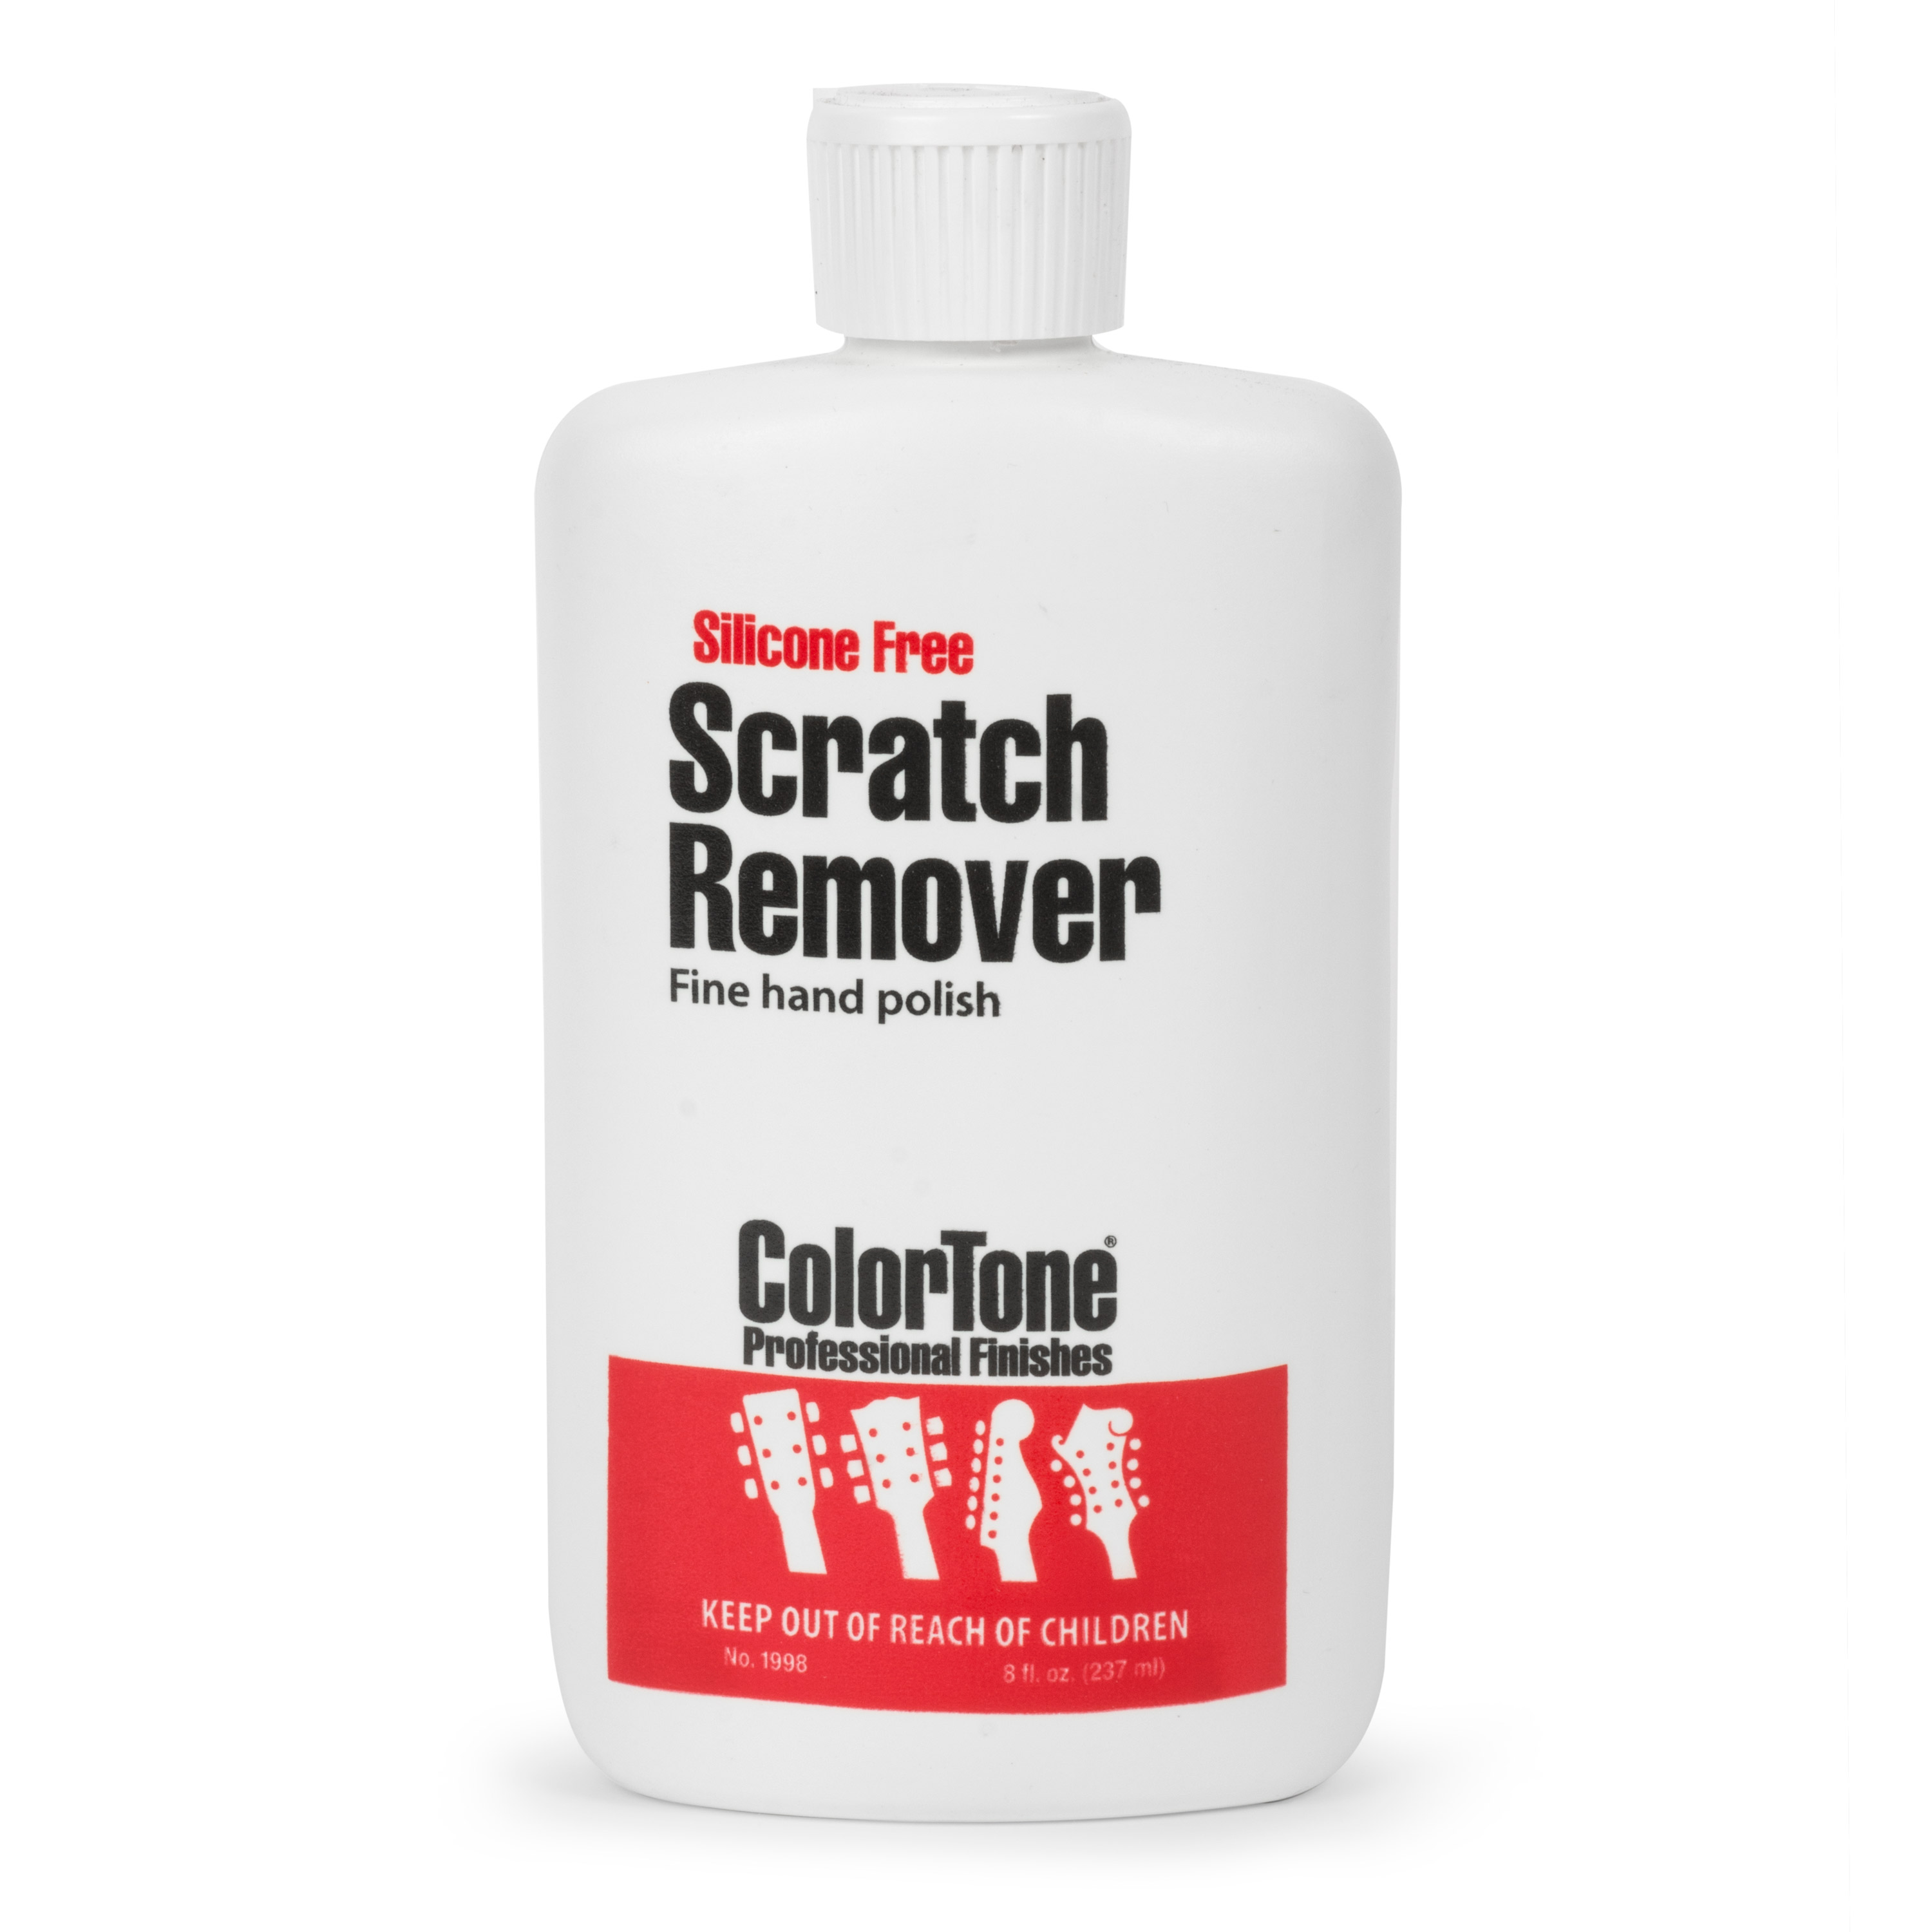 Colortone Scratch Remover, 8-oz. Bottle from StewMac. Colortone